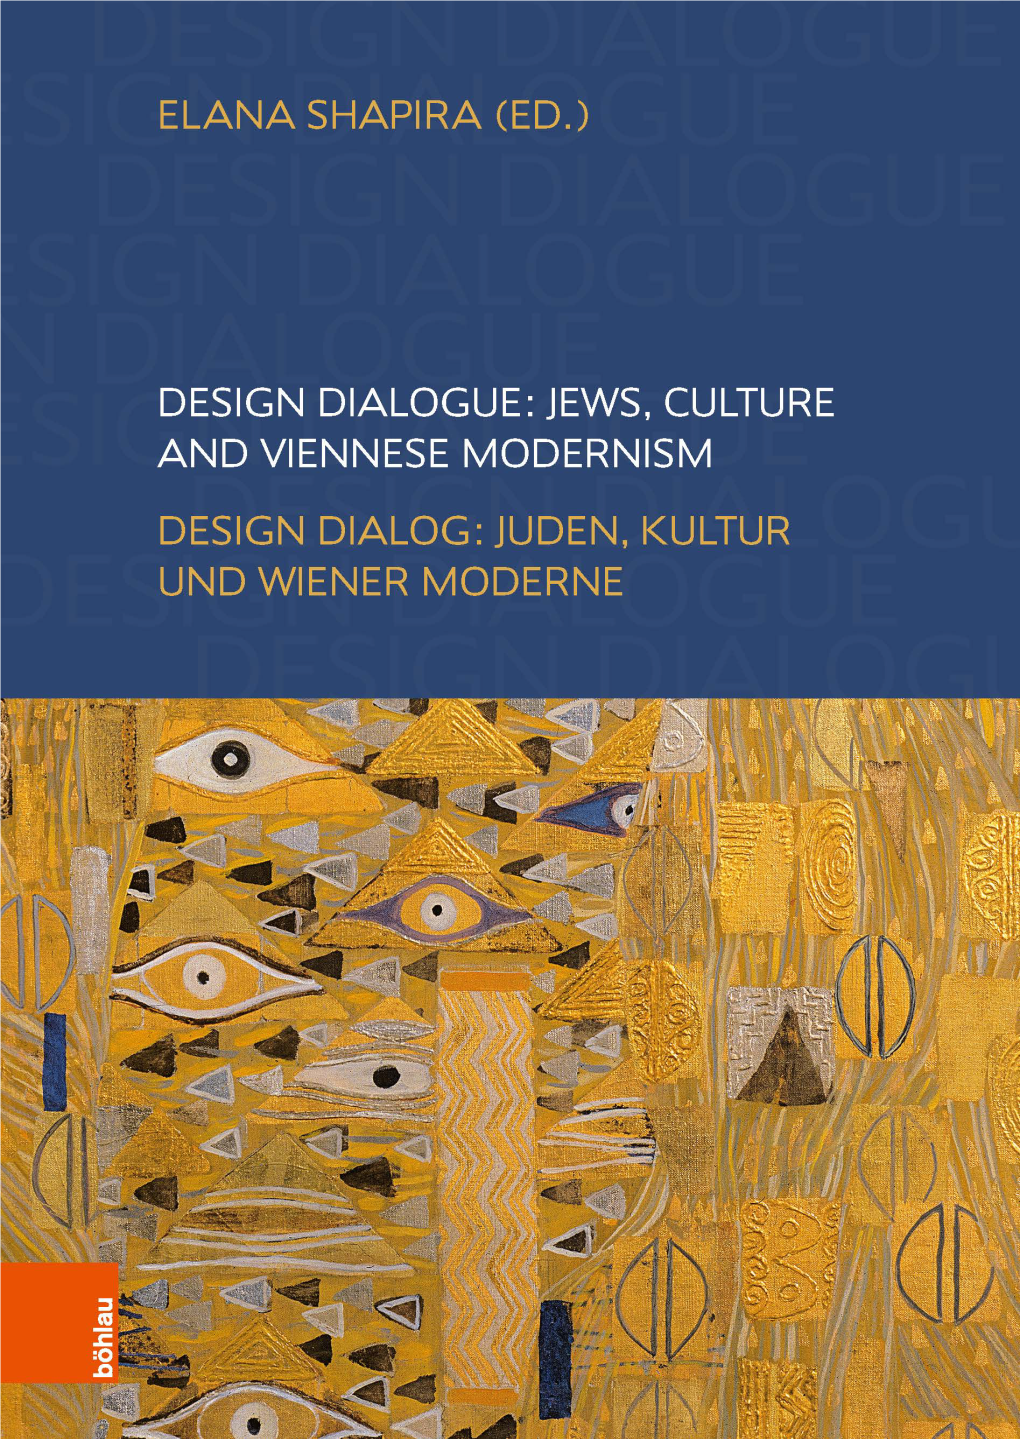 Jews, Culture, and Viennese Modernism Elana Shapira 11